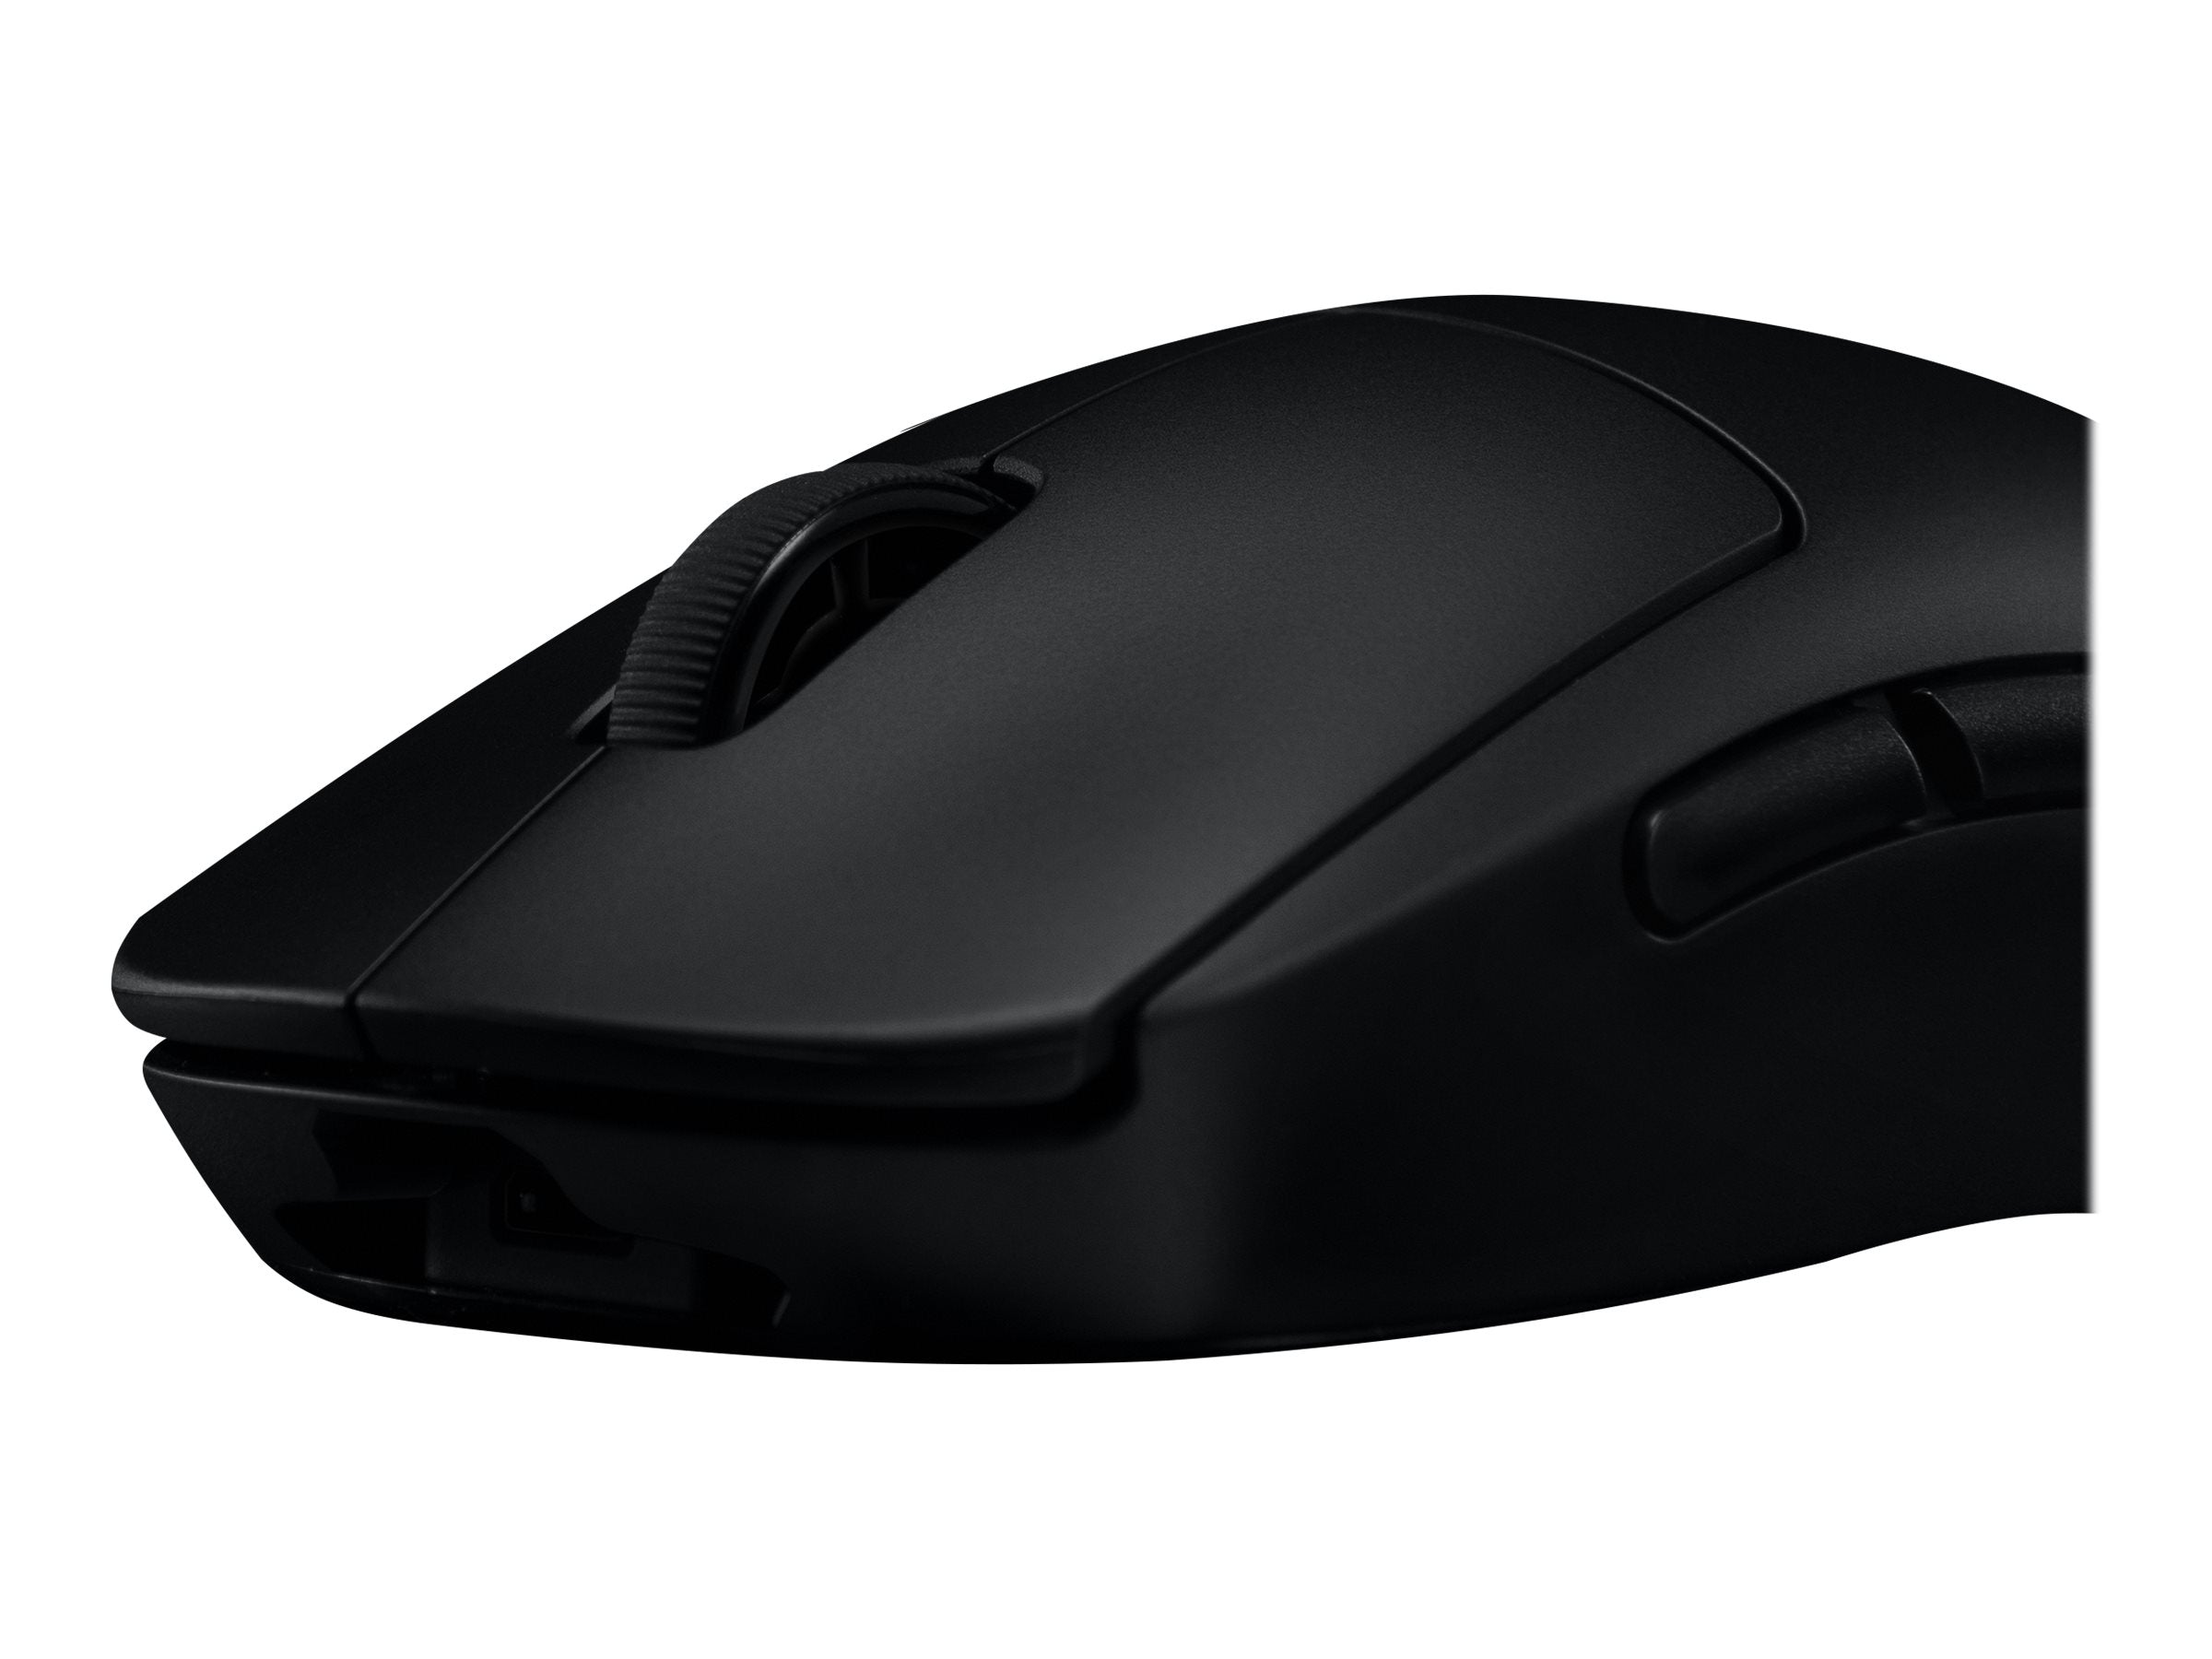 Logitech Gaming Mouse G Pro Optical Wireless Black